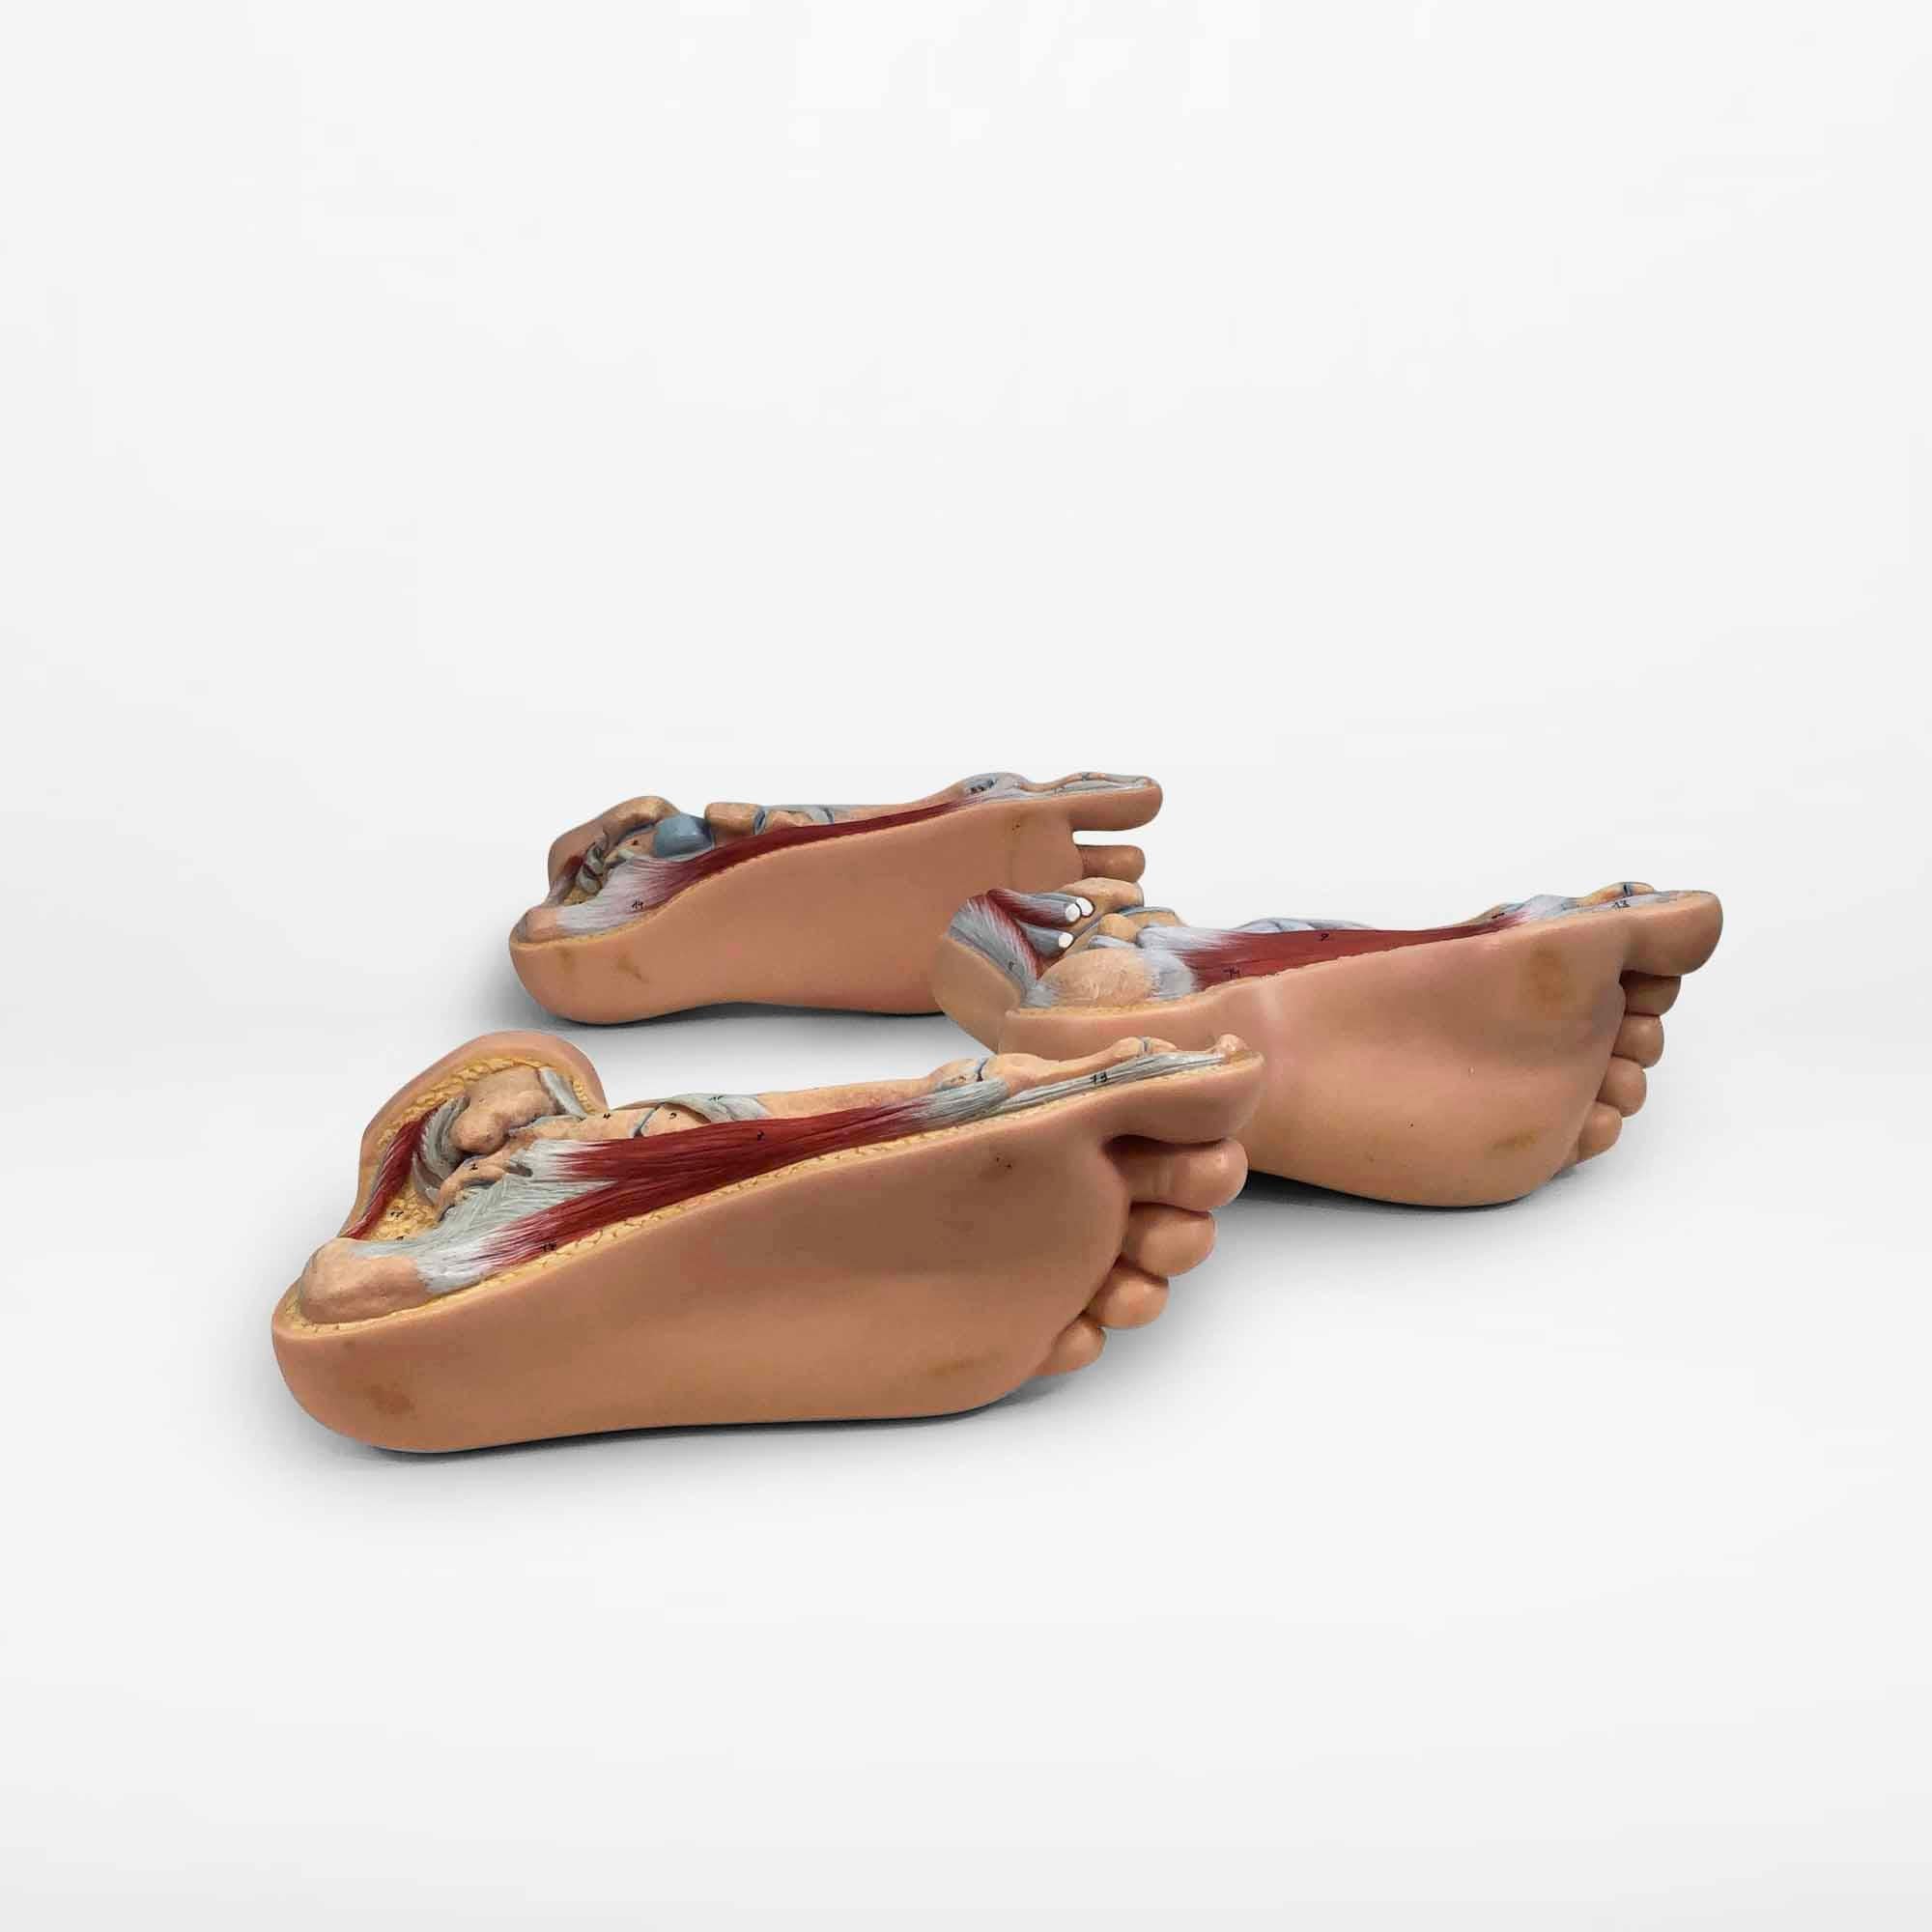 Vintage Anatomical Model of 3 Human Feet, Set of 3 2